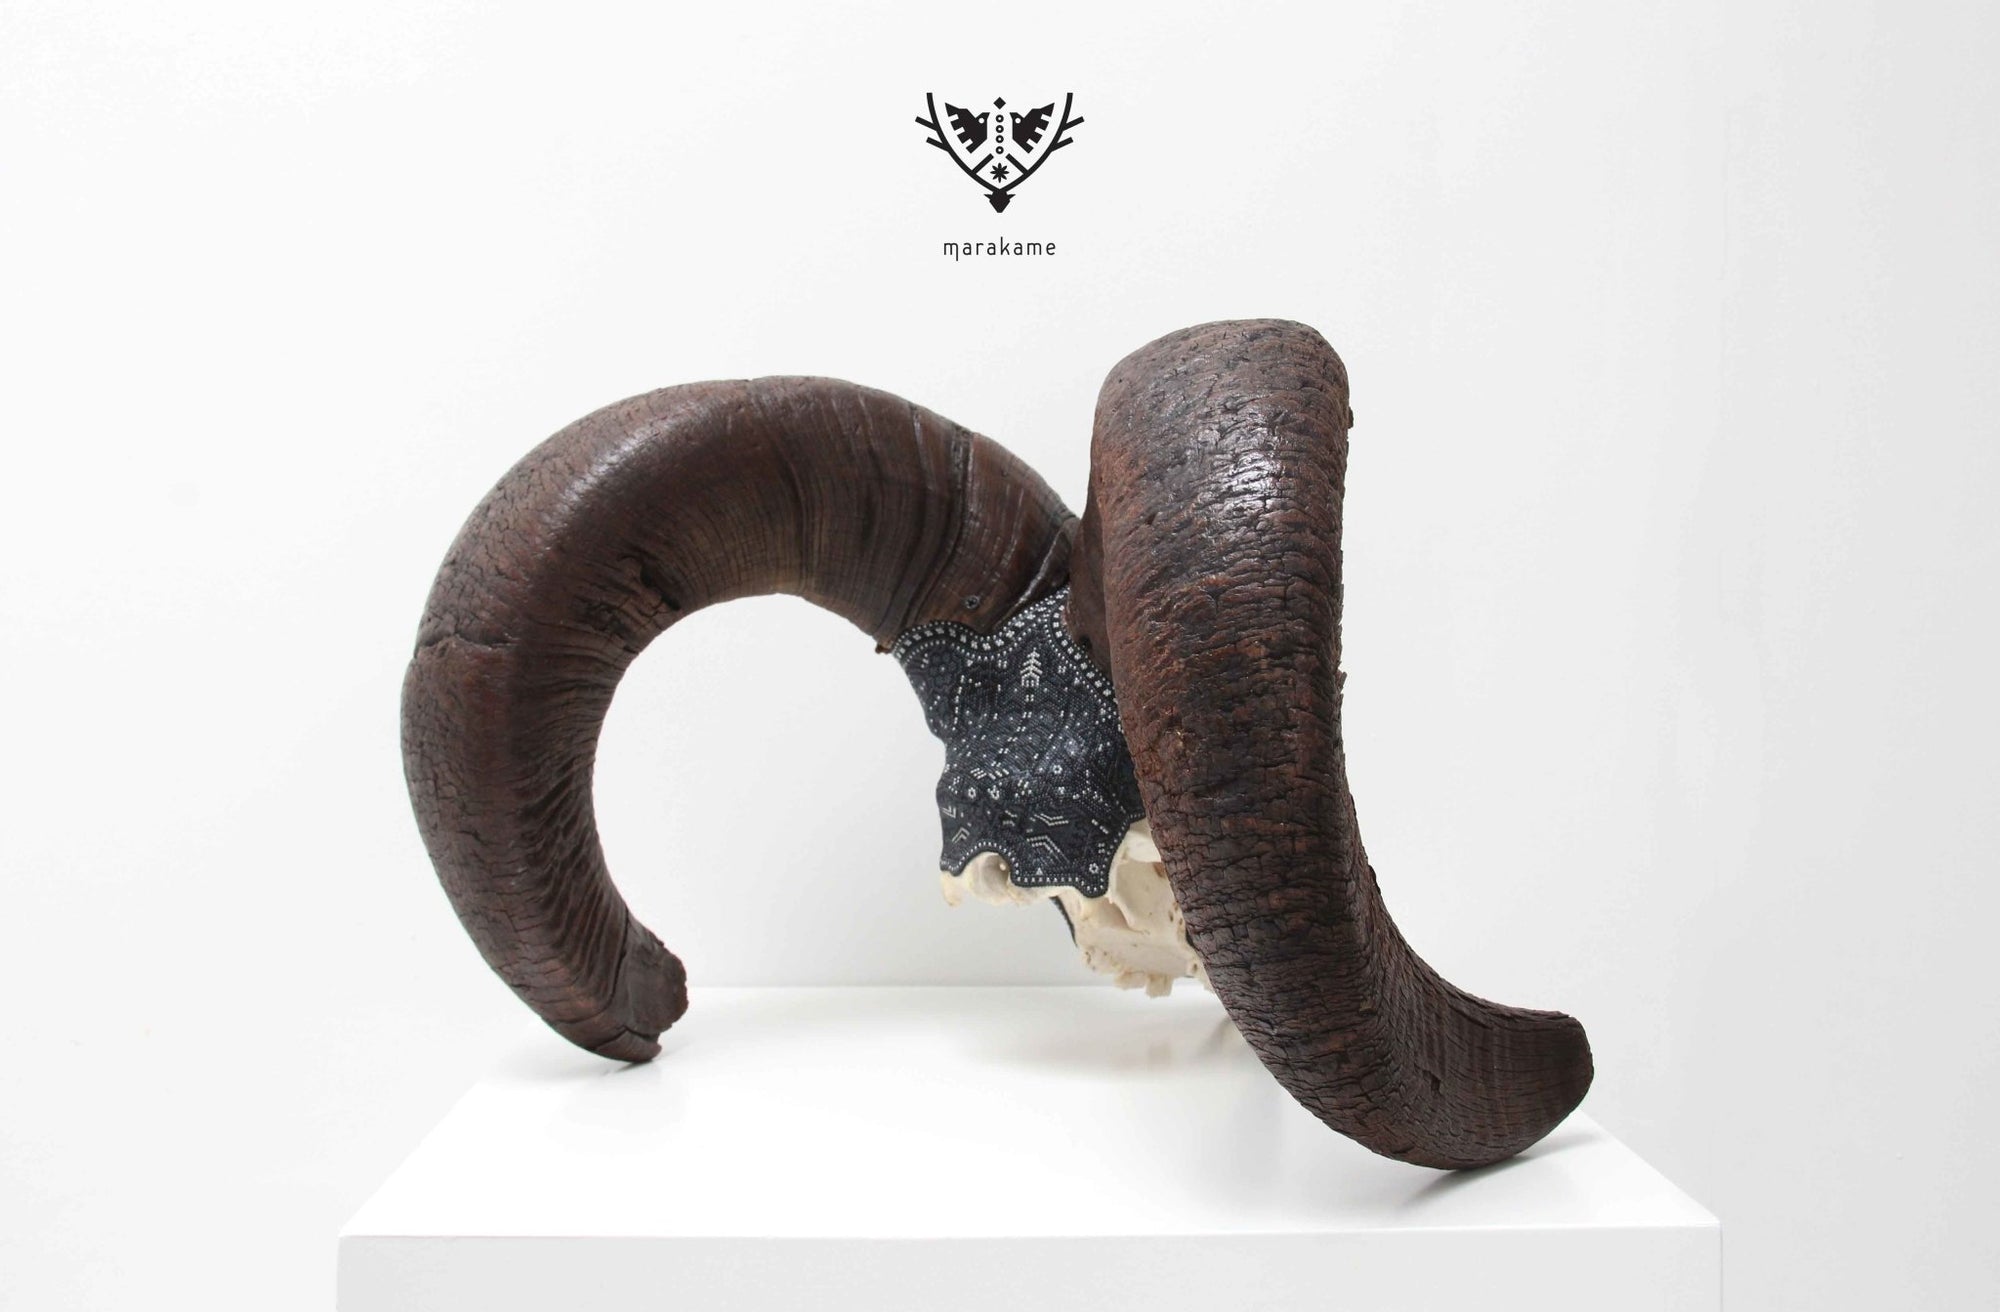 Authentic bighorn sheep skull - K + pierita - Huichol art - Marakame